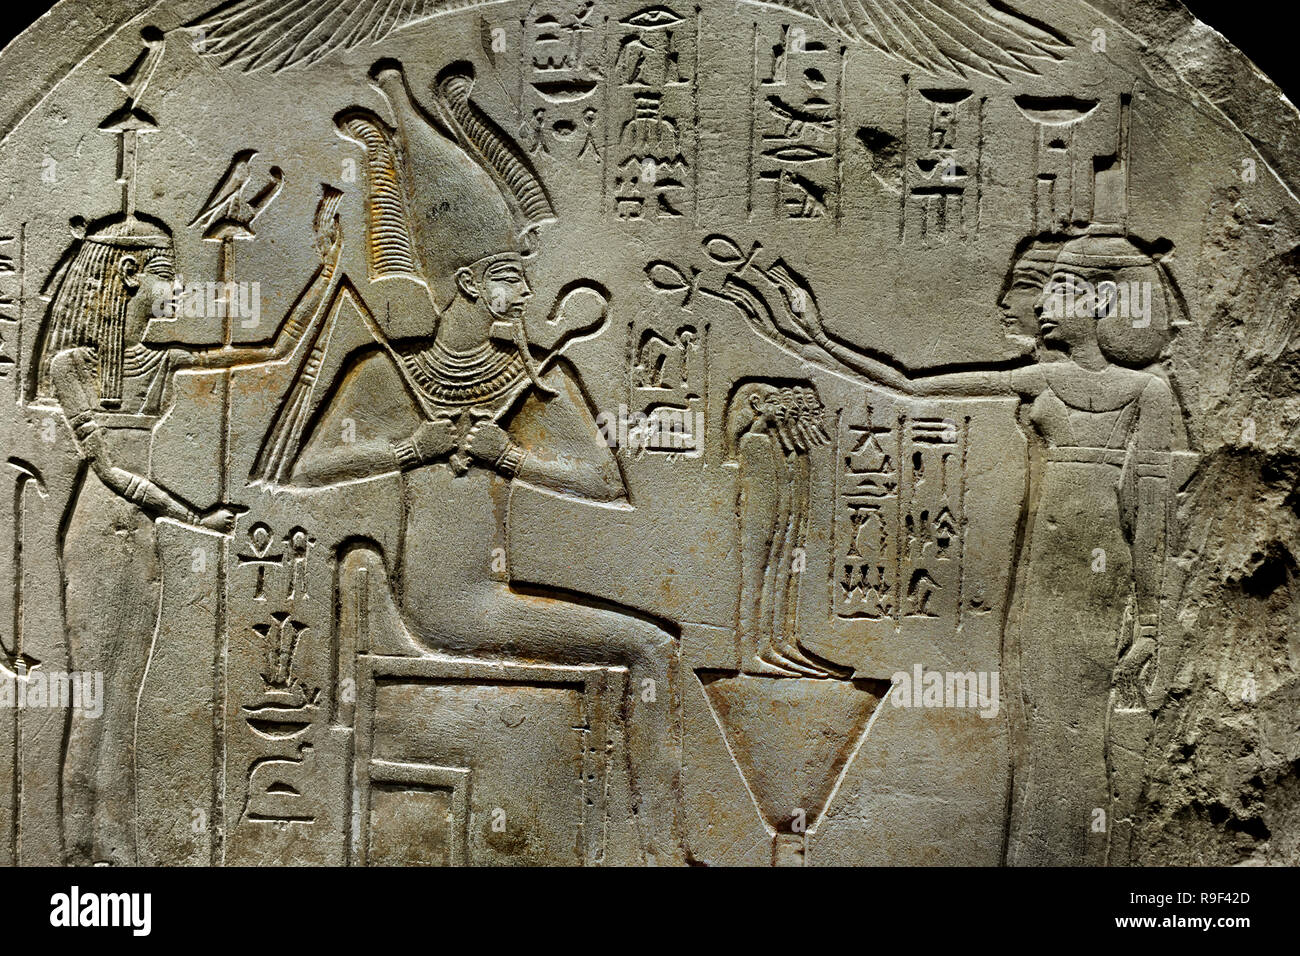 Stele Fragment with Osiris and other gods, 49 x 55 x 10 cm, Period: New Kingdom 1550-1070 BC, Egypt, Egyptian. Stock Photo